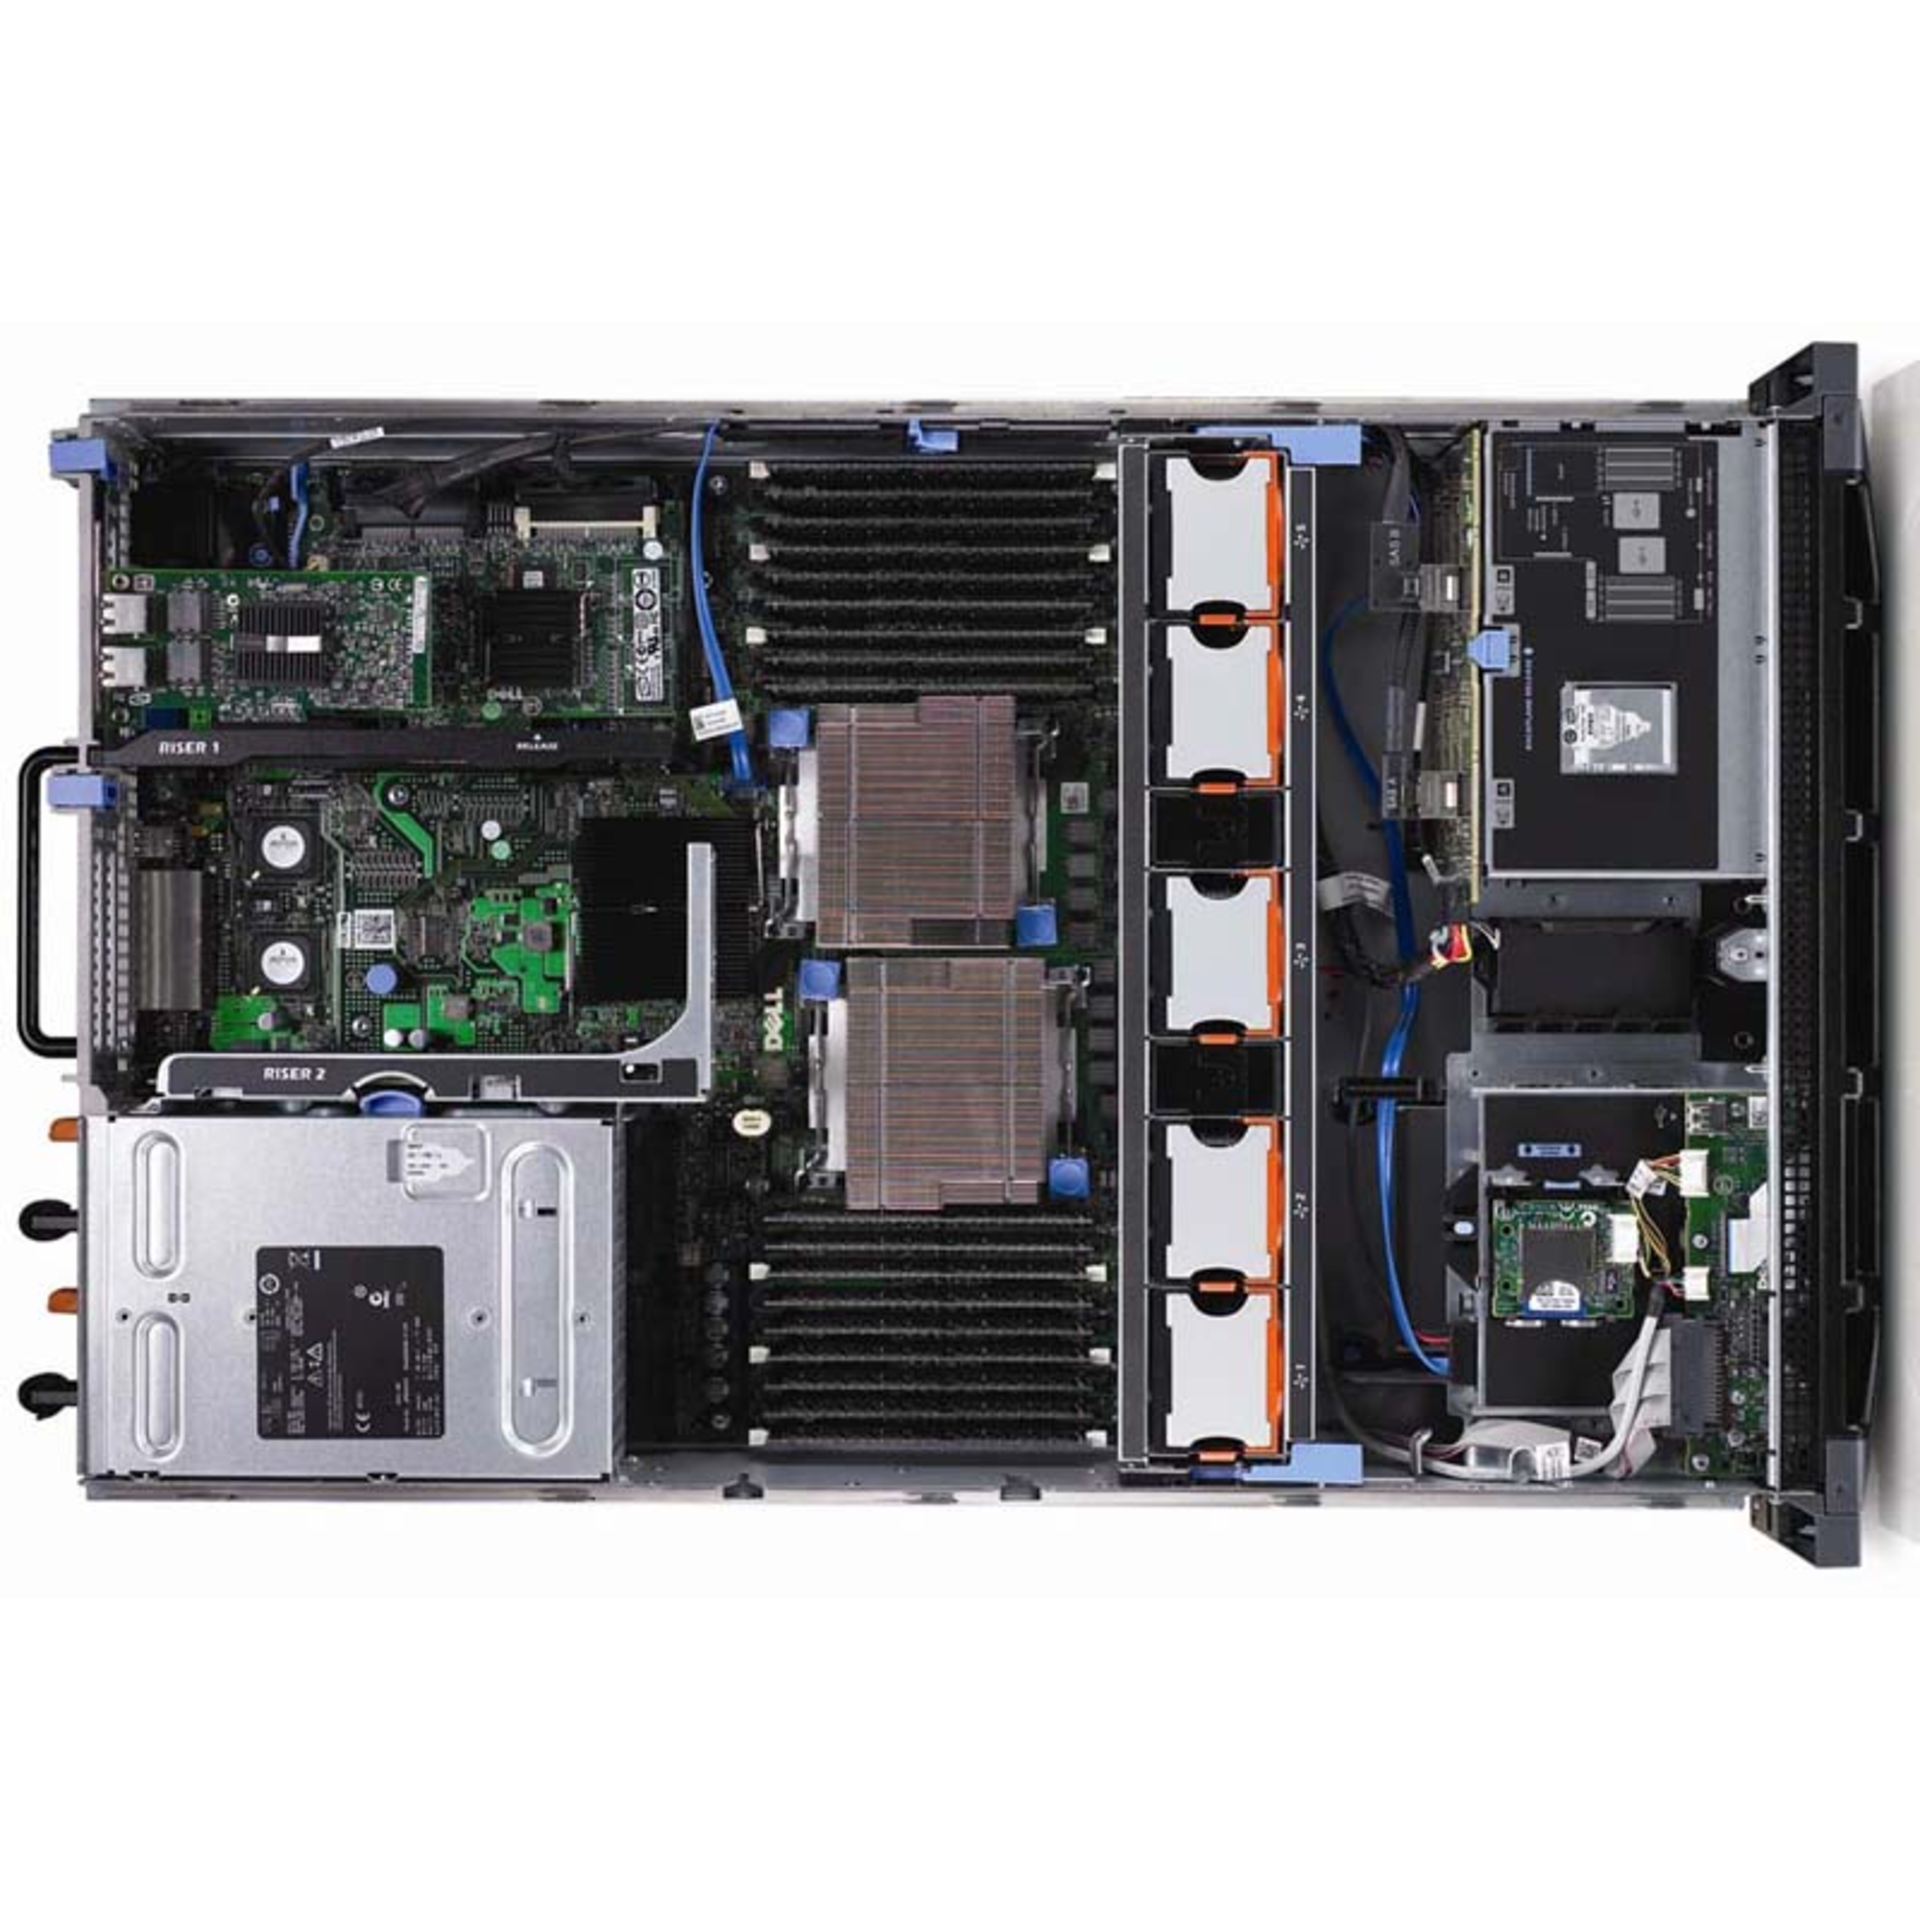 Сервер Dell PowerEdge R710, 2 процессора Intel Xeon Quad-Core E5620 2.4GHz, 24GB DRAM